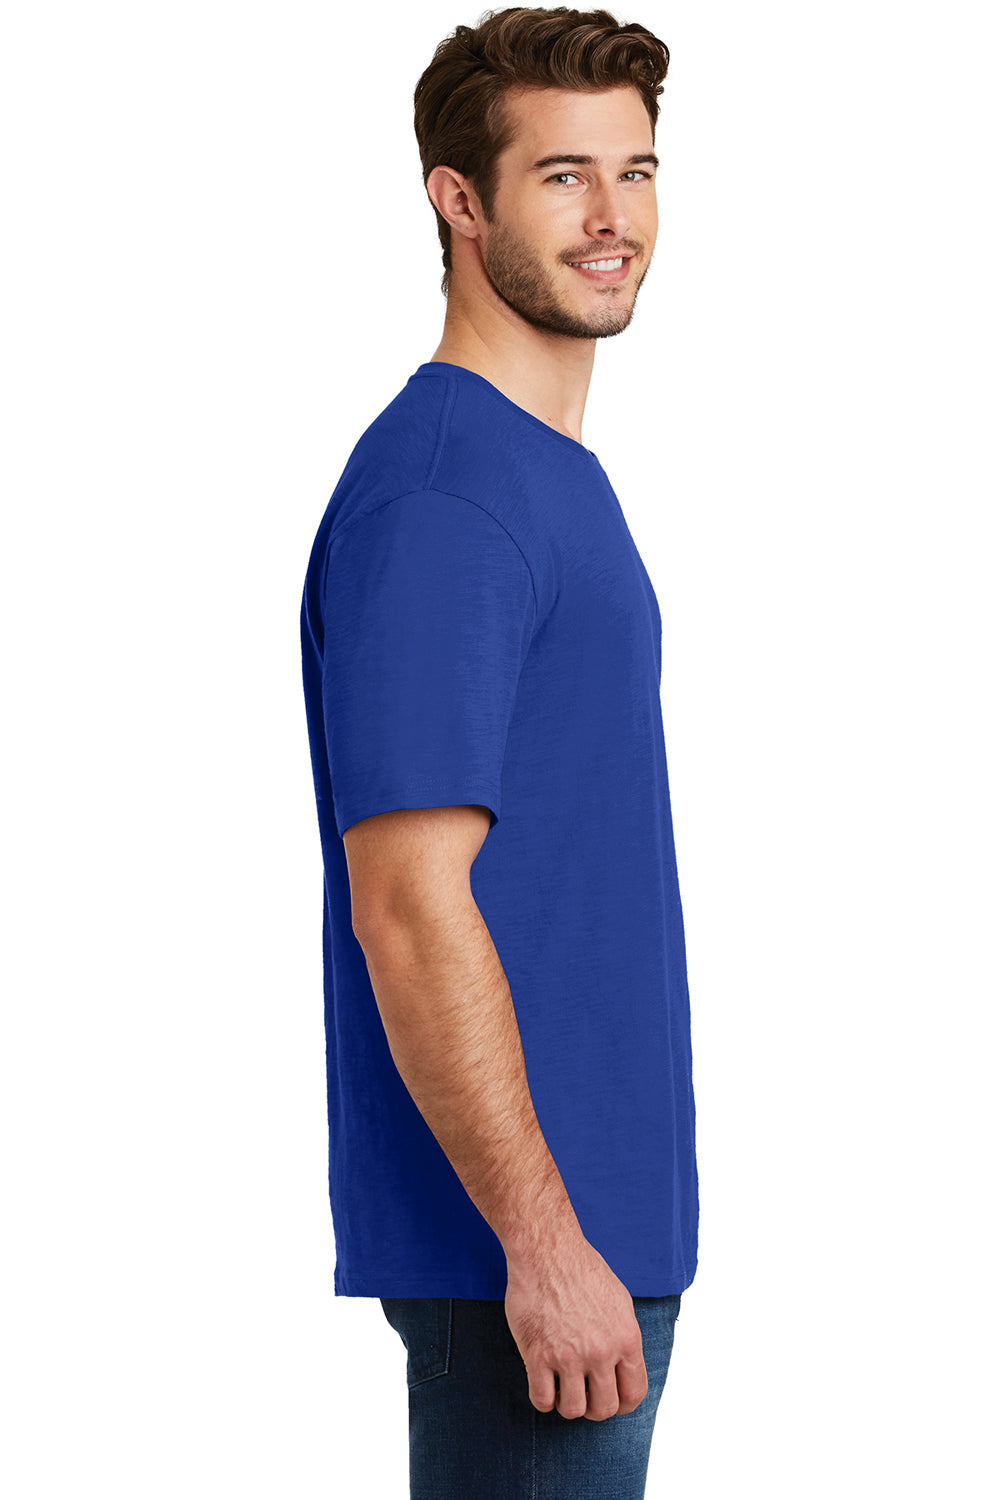 District DM3000 Mens Super Slub Short Sleeve Crewneck T-Shirt Royal Blue Side